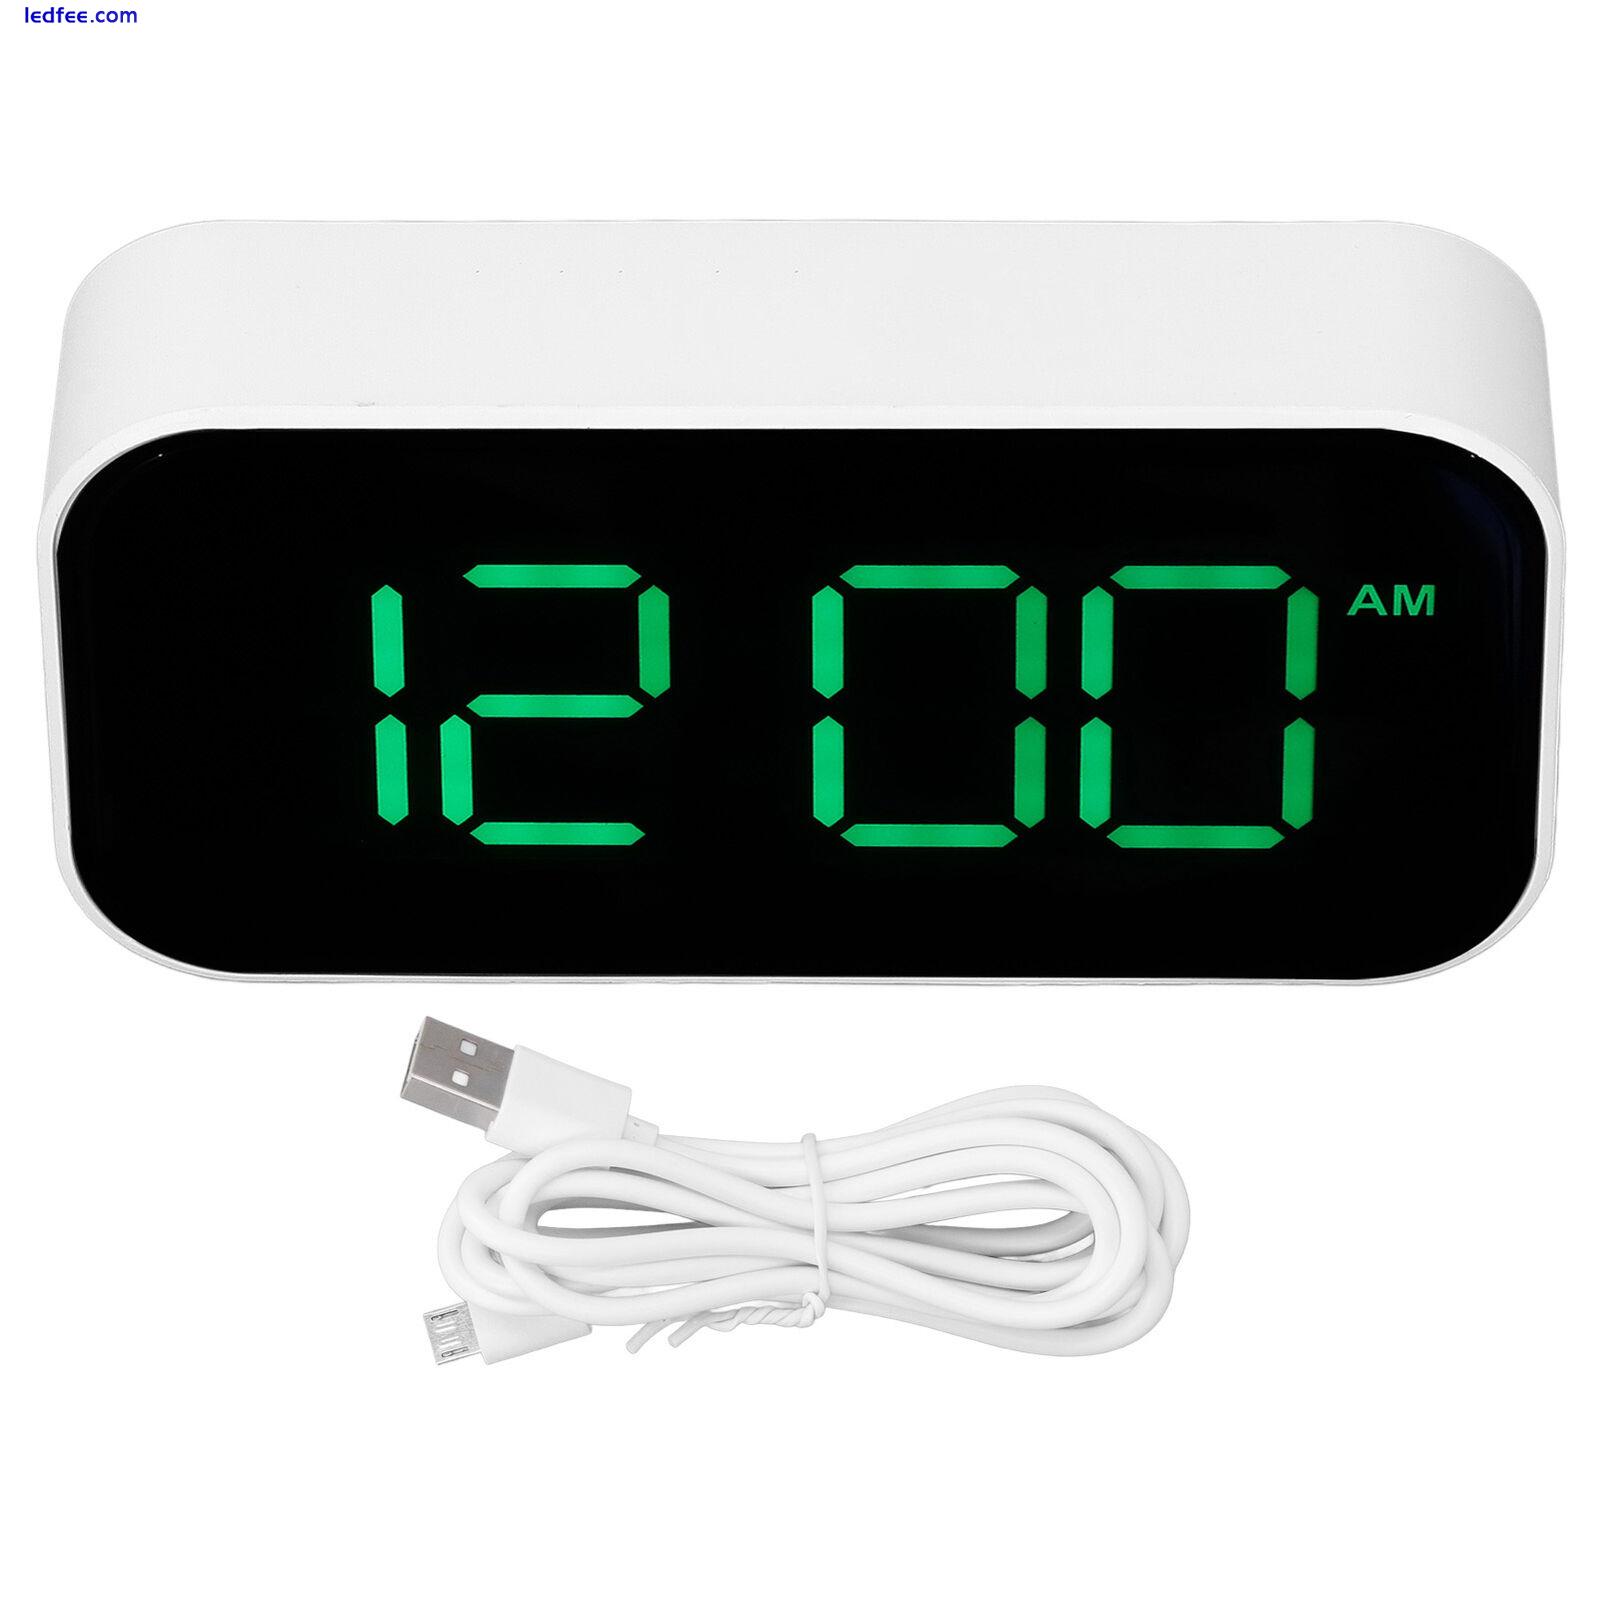 LED Digital Alarm Clock Brightness Adjustable 12/24Hr White Shell Green Font New 1 